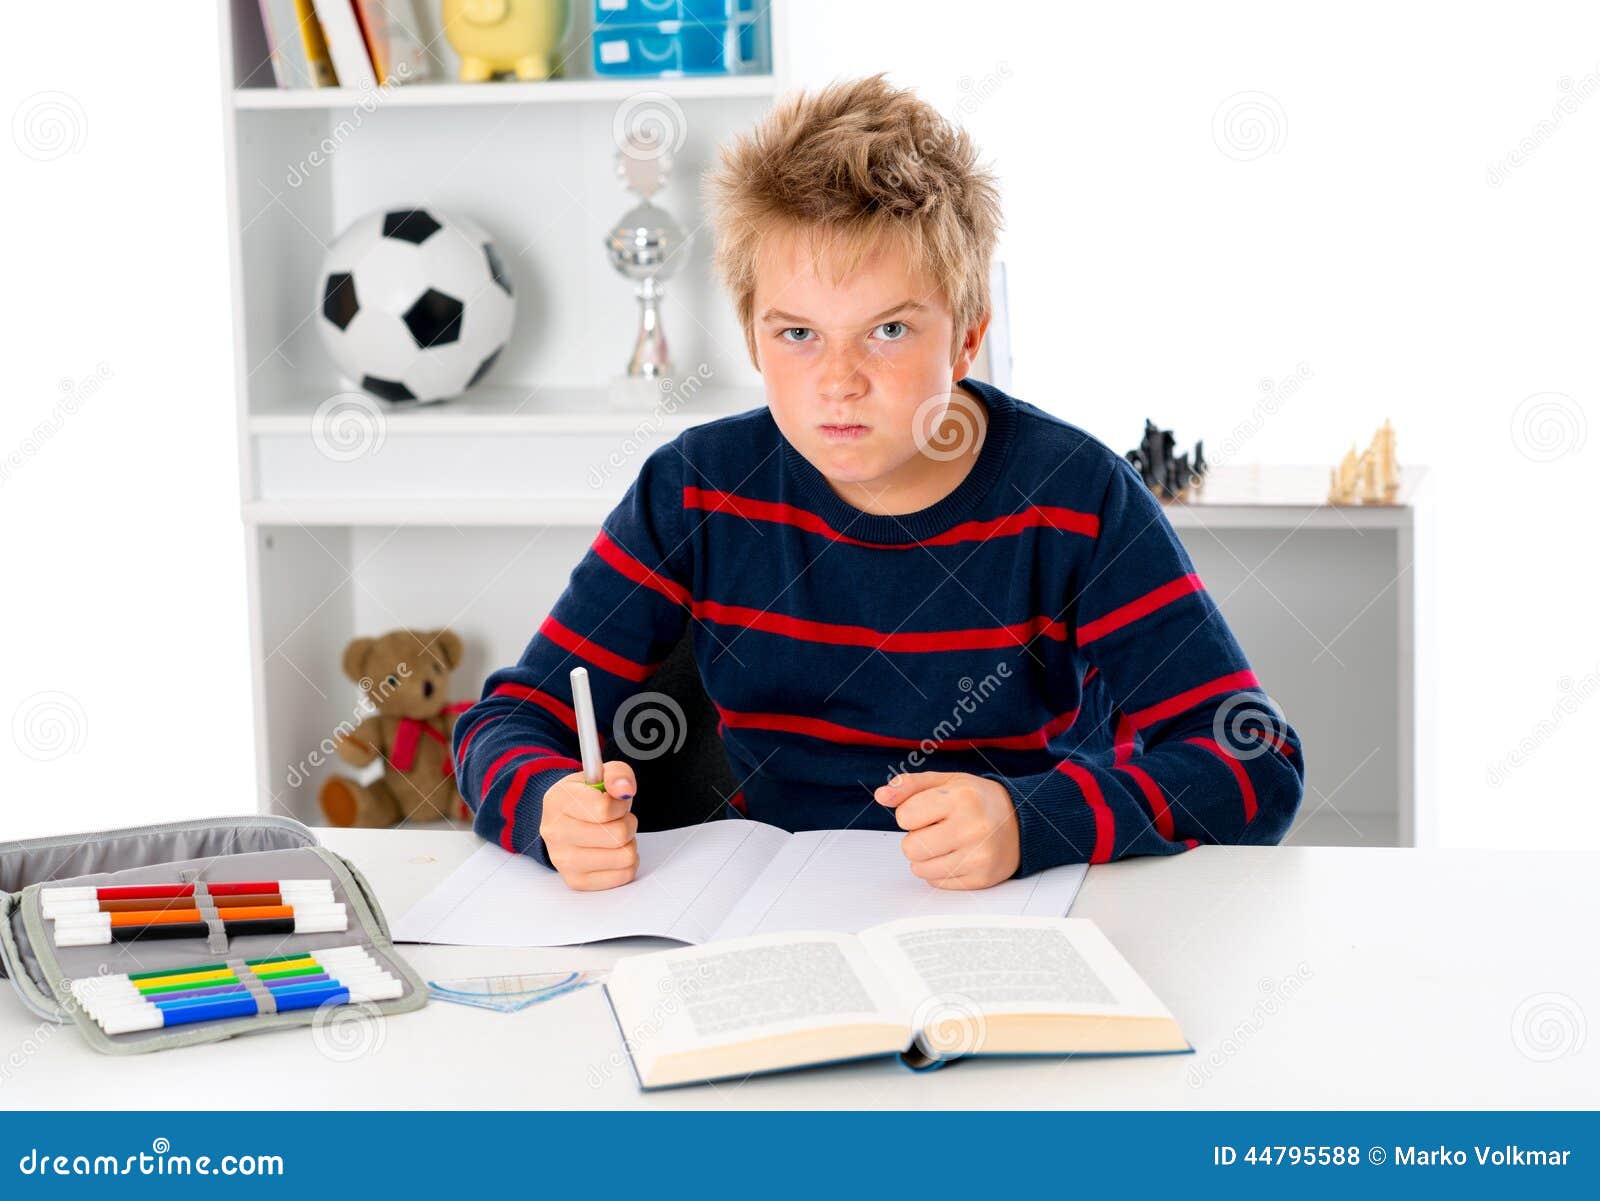 child gets angry doing homework